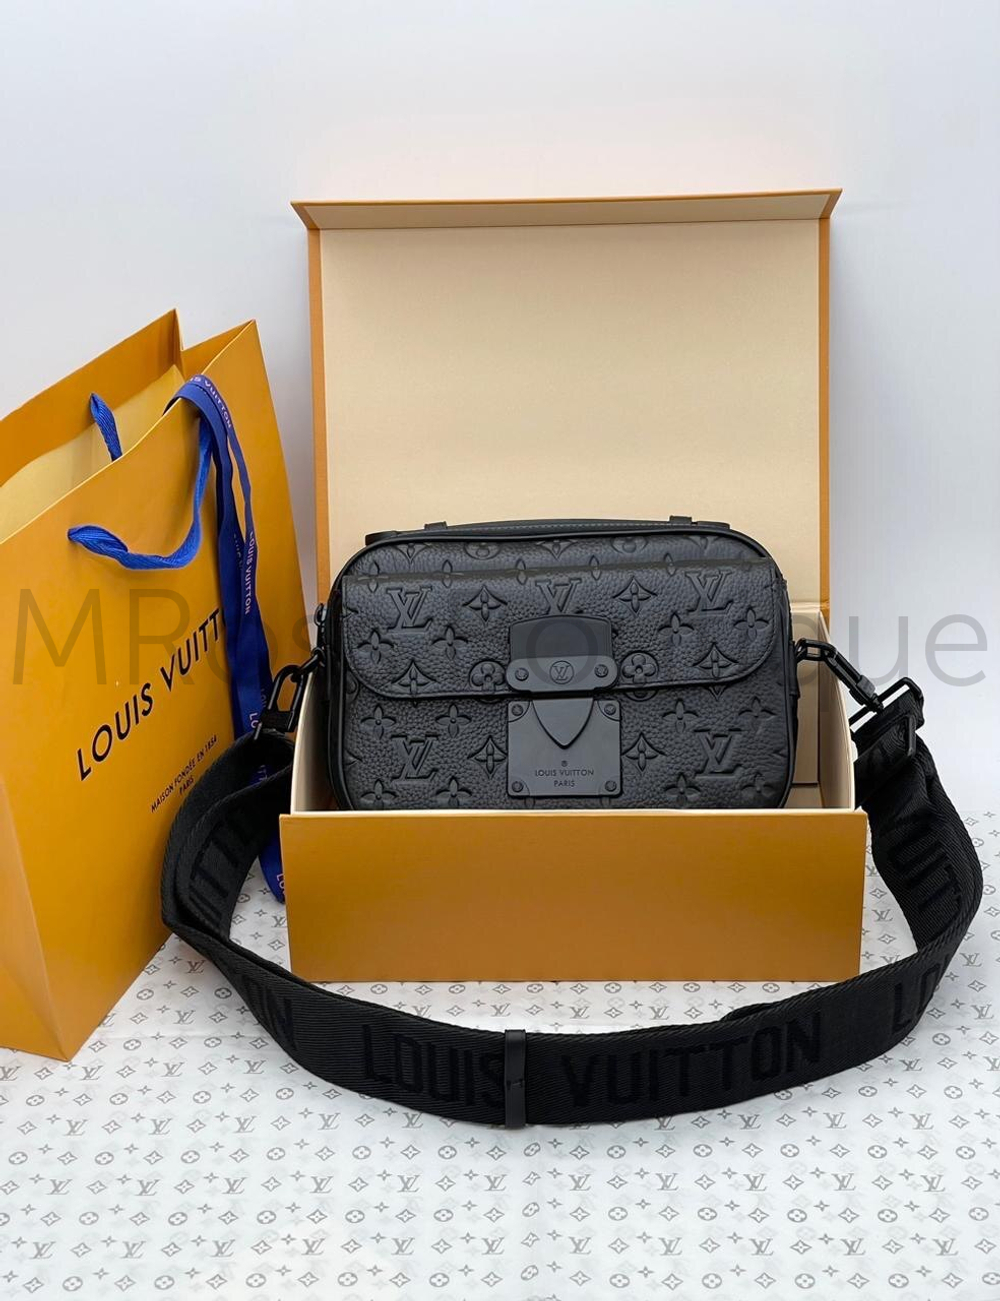 Мужская сумка S-Lock Louis Vuitton из кожи Taurillon премиум класса